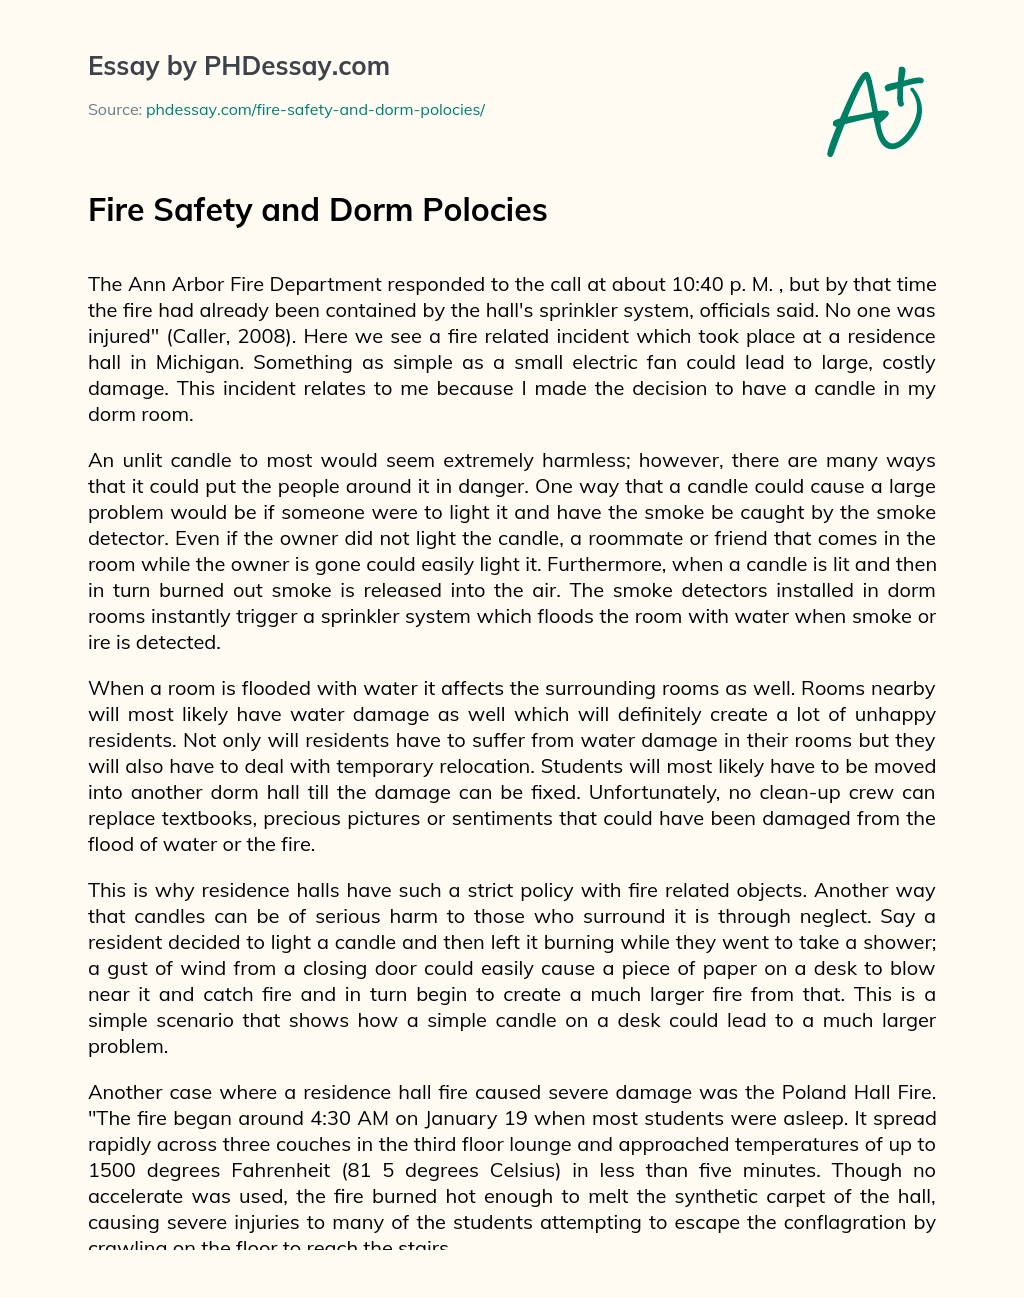 Fire Safety and Dorm Polocies essay